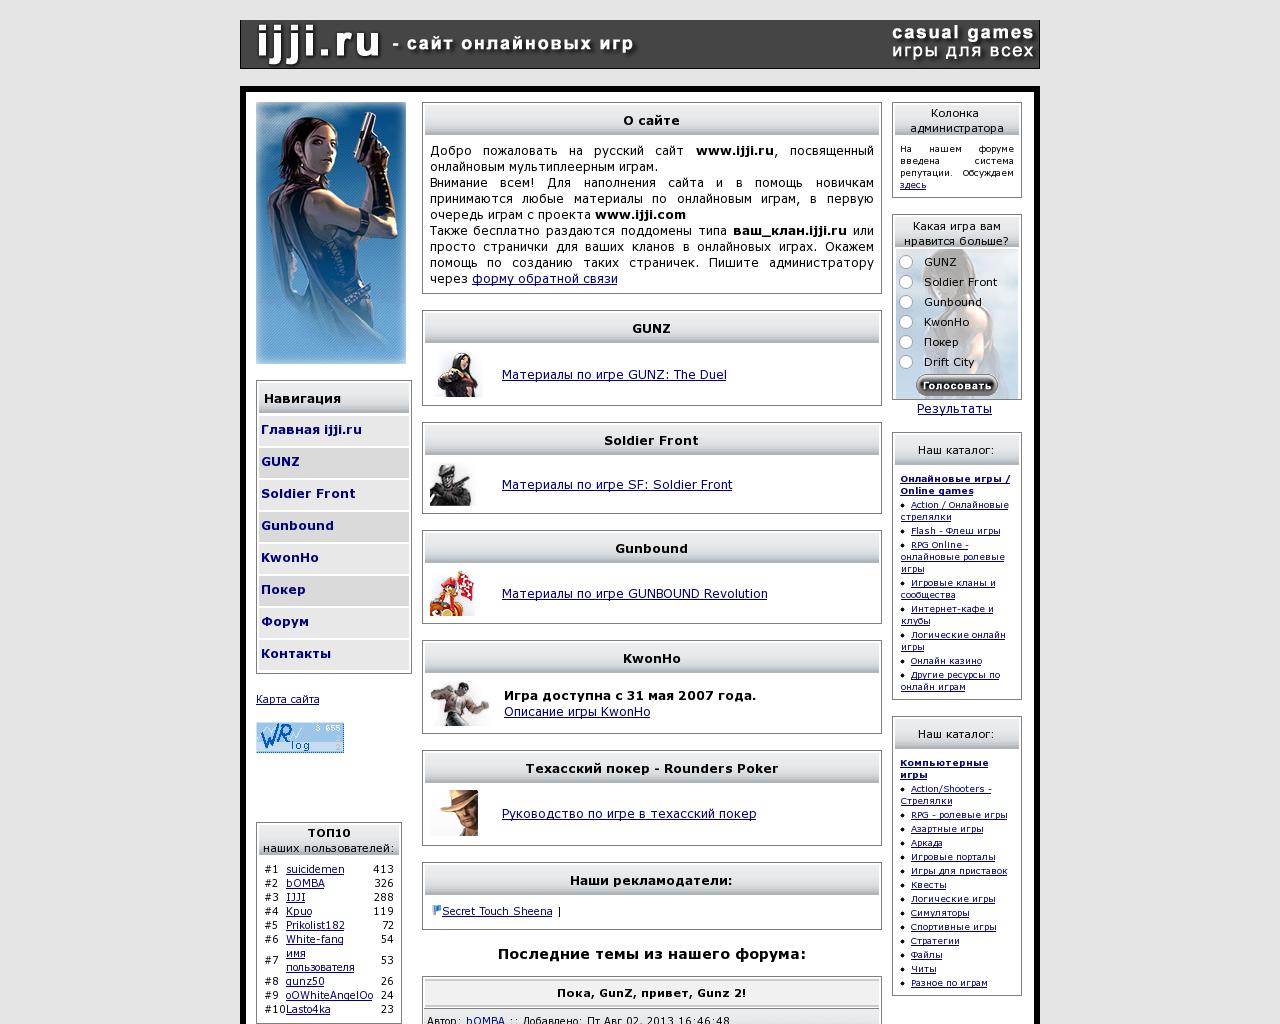 Изображение сайта ijji.ru в разрешении 1280x1024